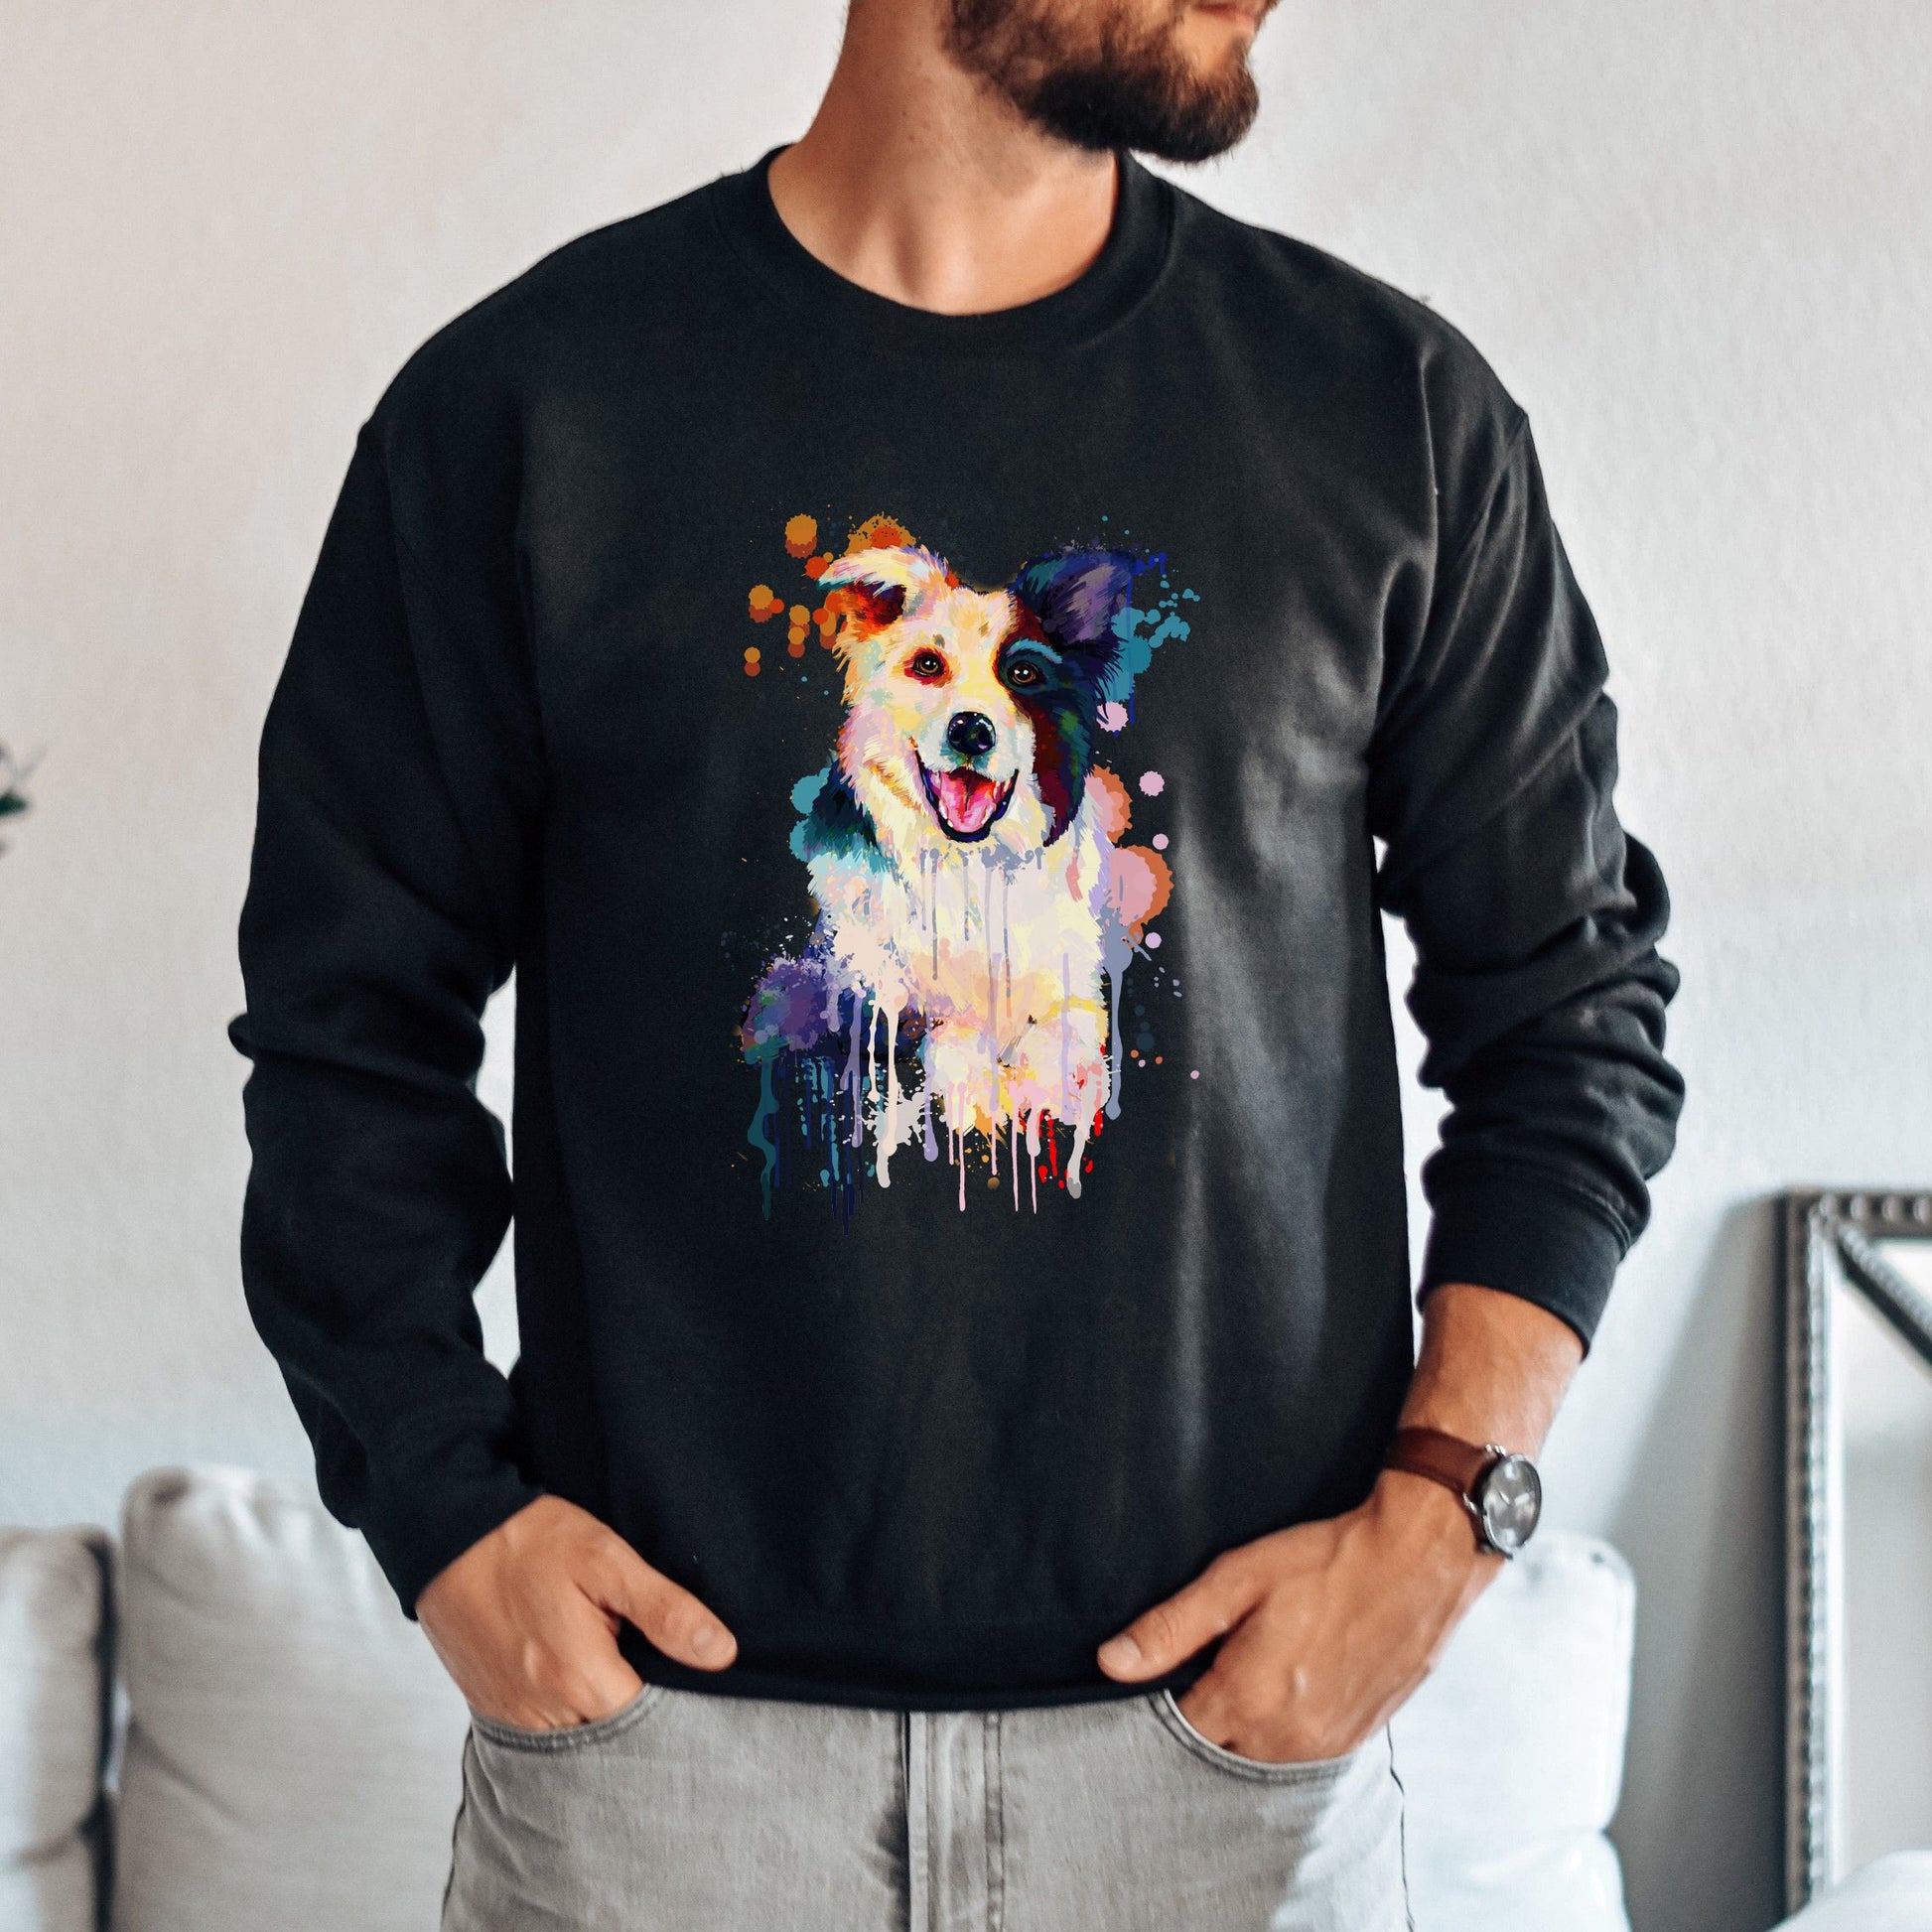 Abstract Border collie dog Unisex Crewneck Sweatshirt with expressive splashes-Family-Gift-Planet